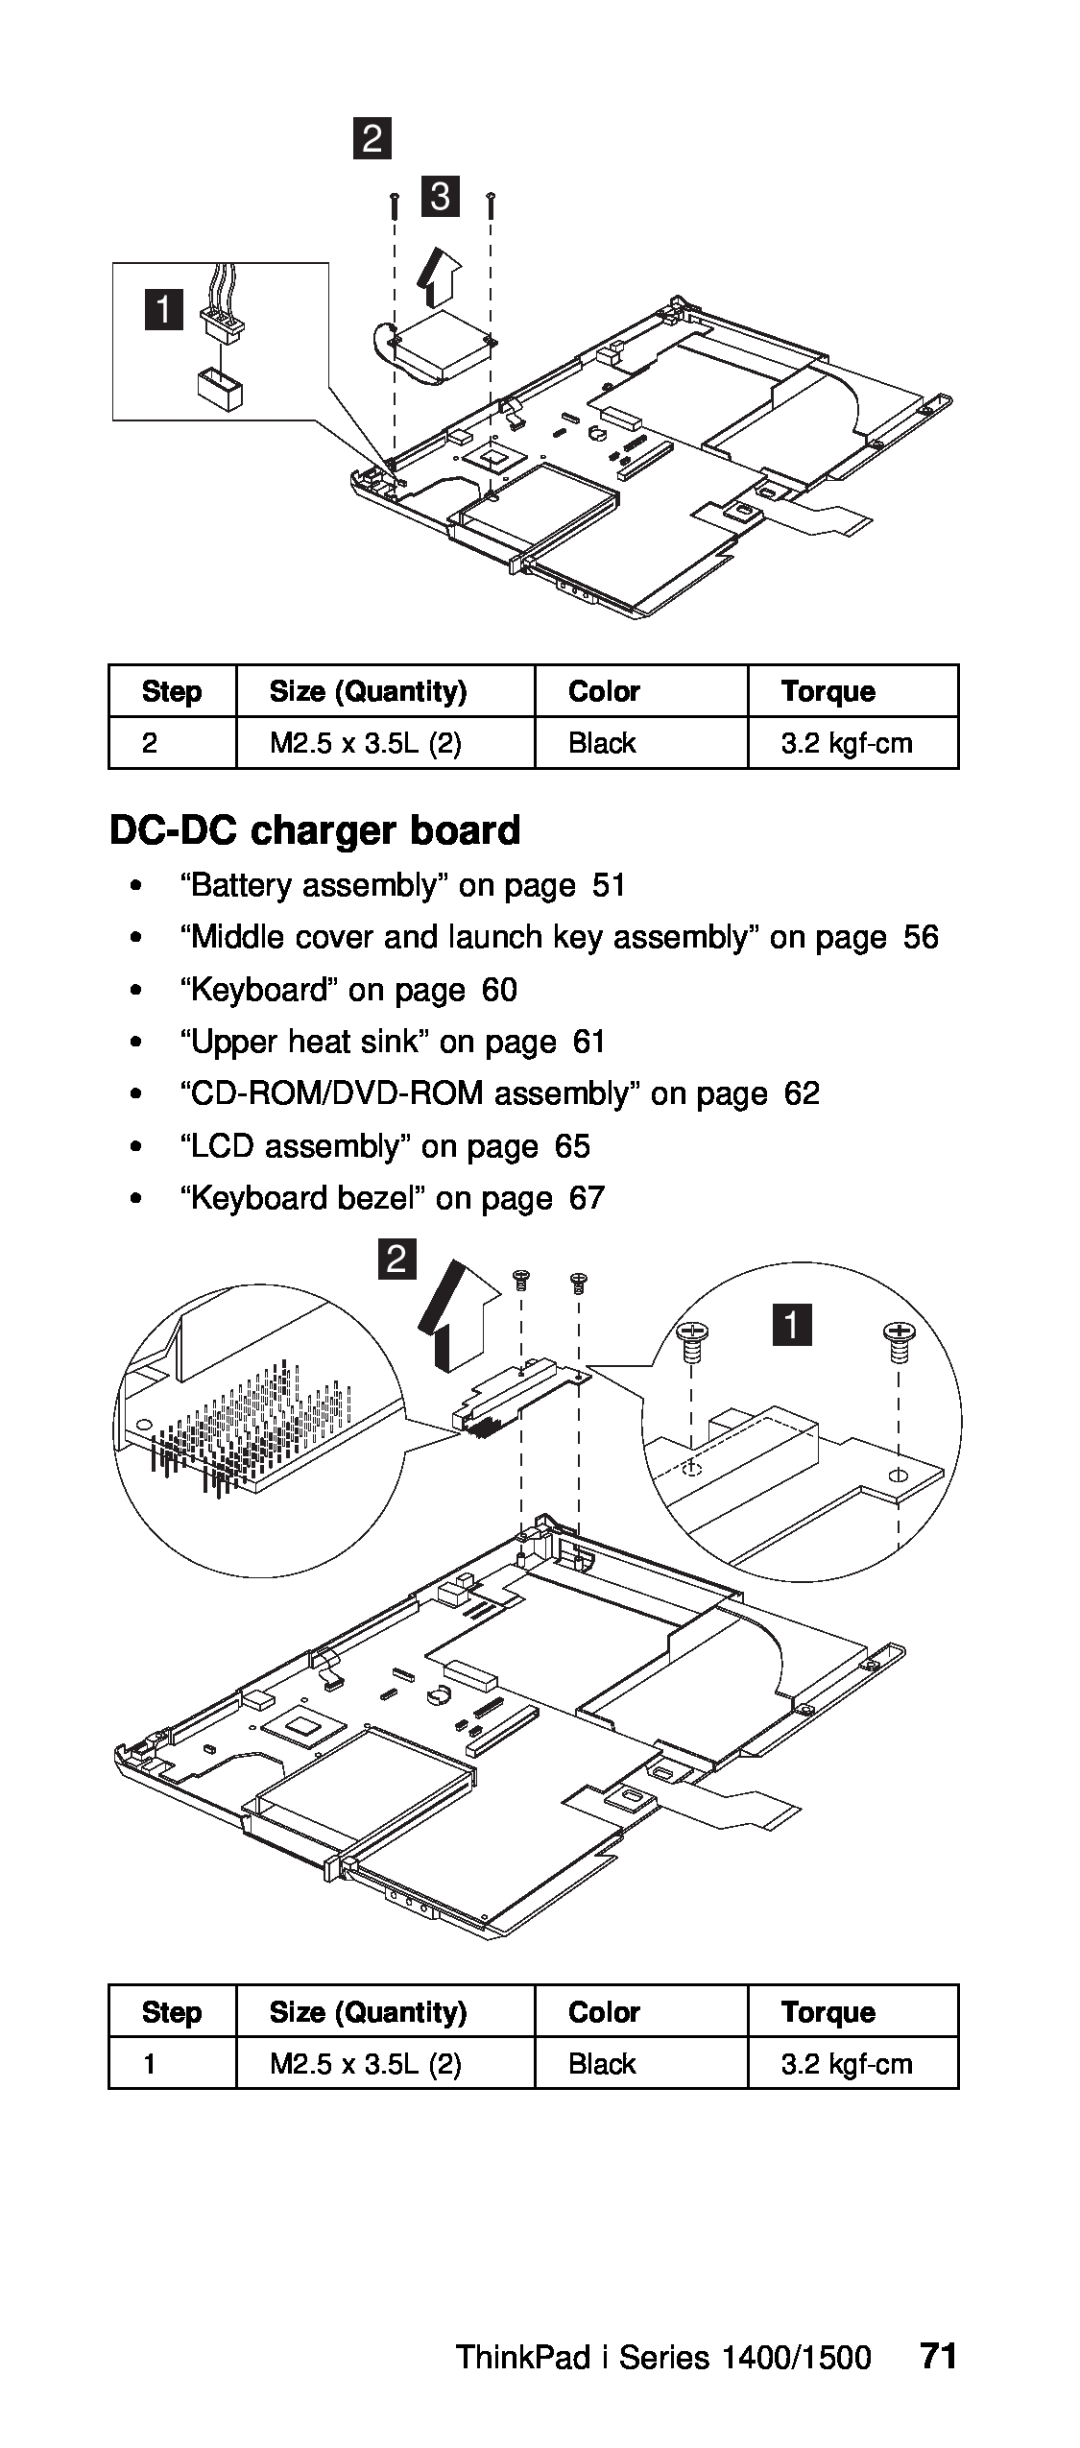 IBM Series 1400, Series 1500 manual board, charger 